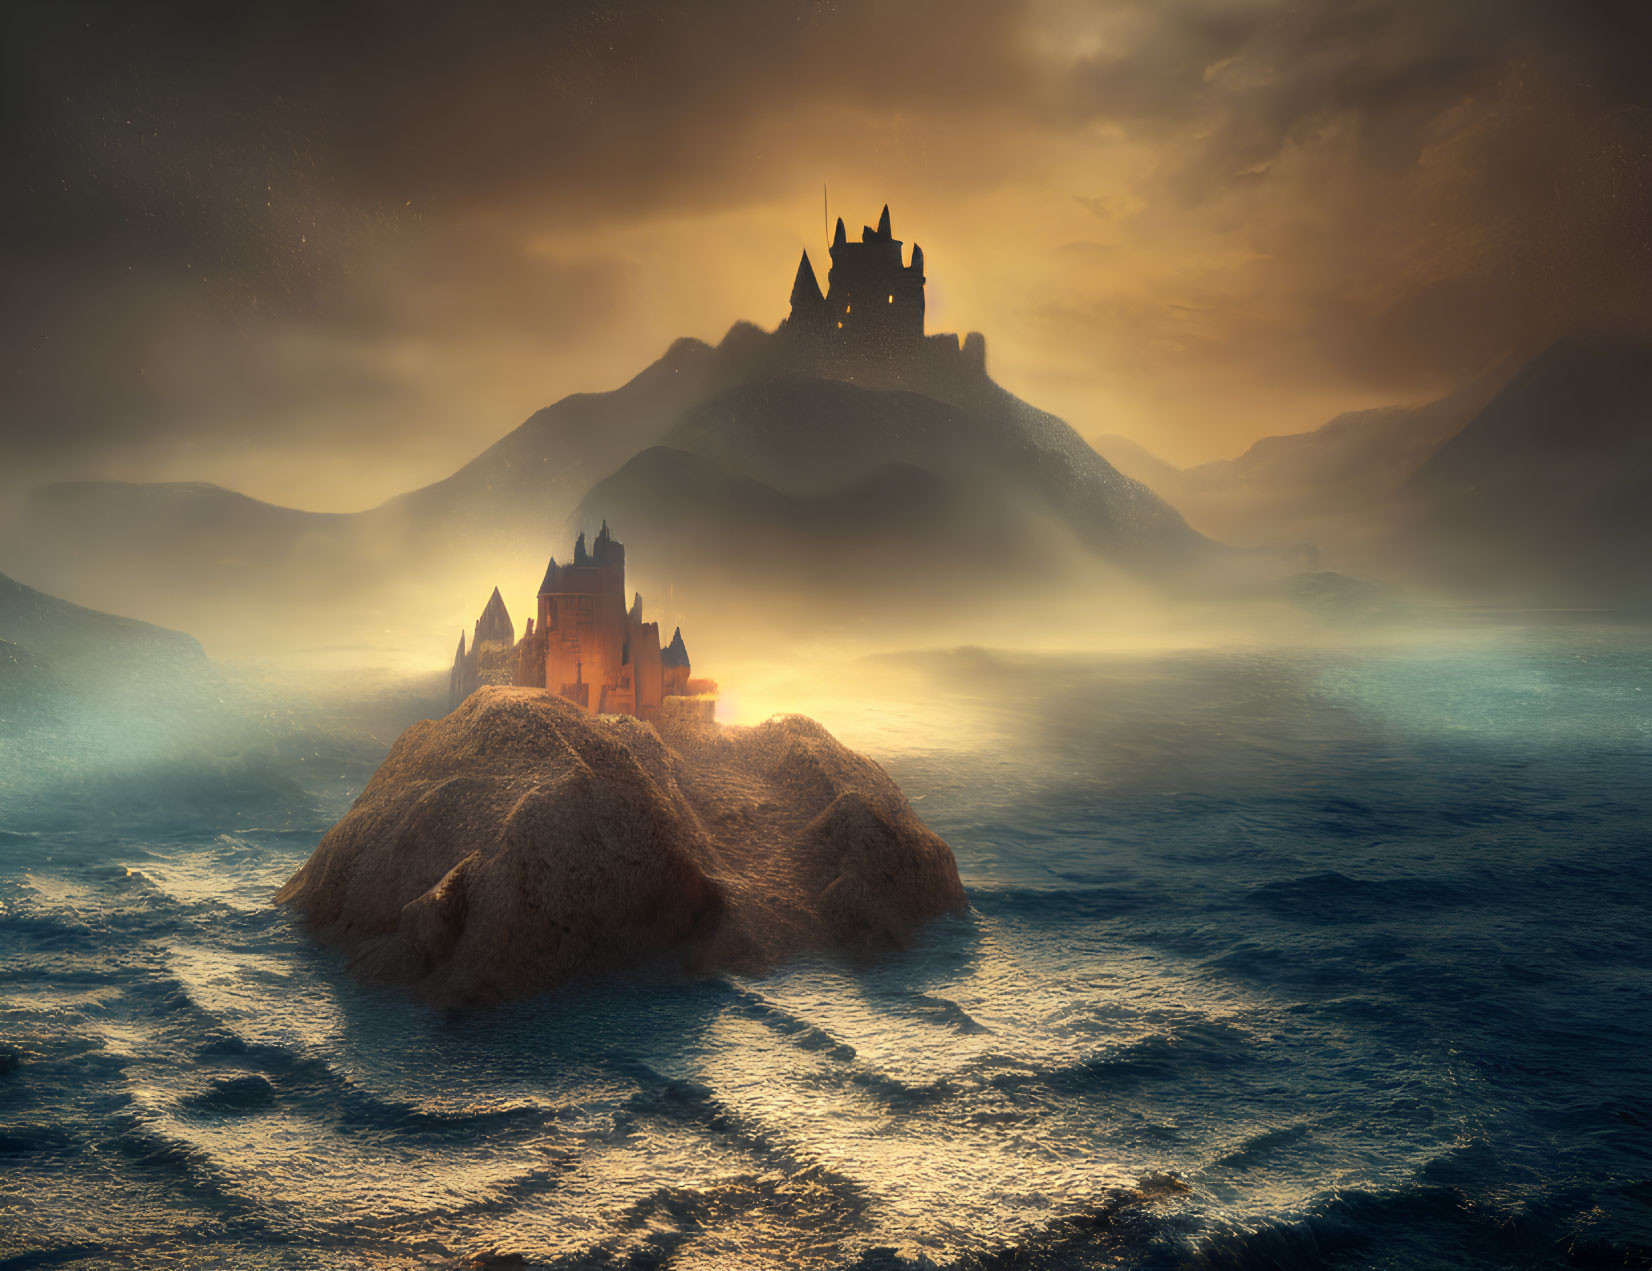 Castle on rocky island under dramatic sky with mystical light